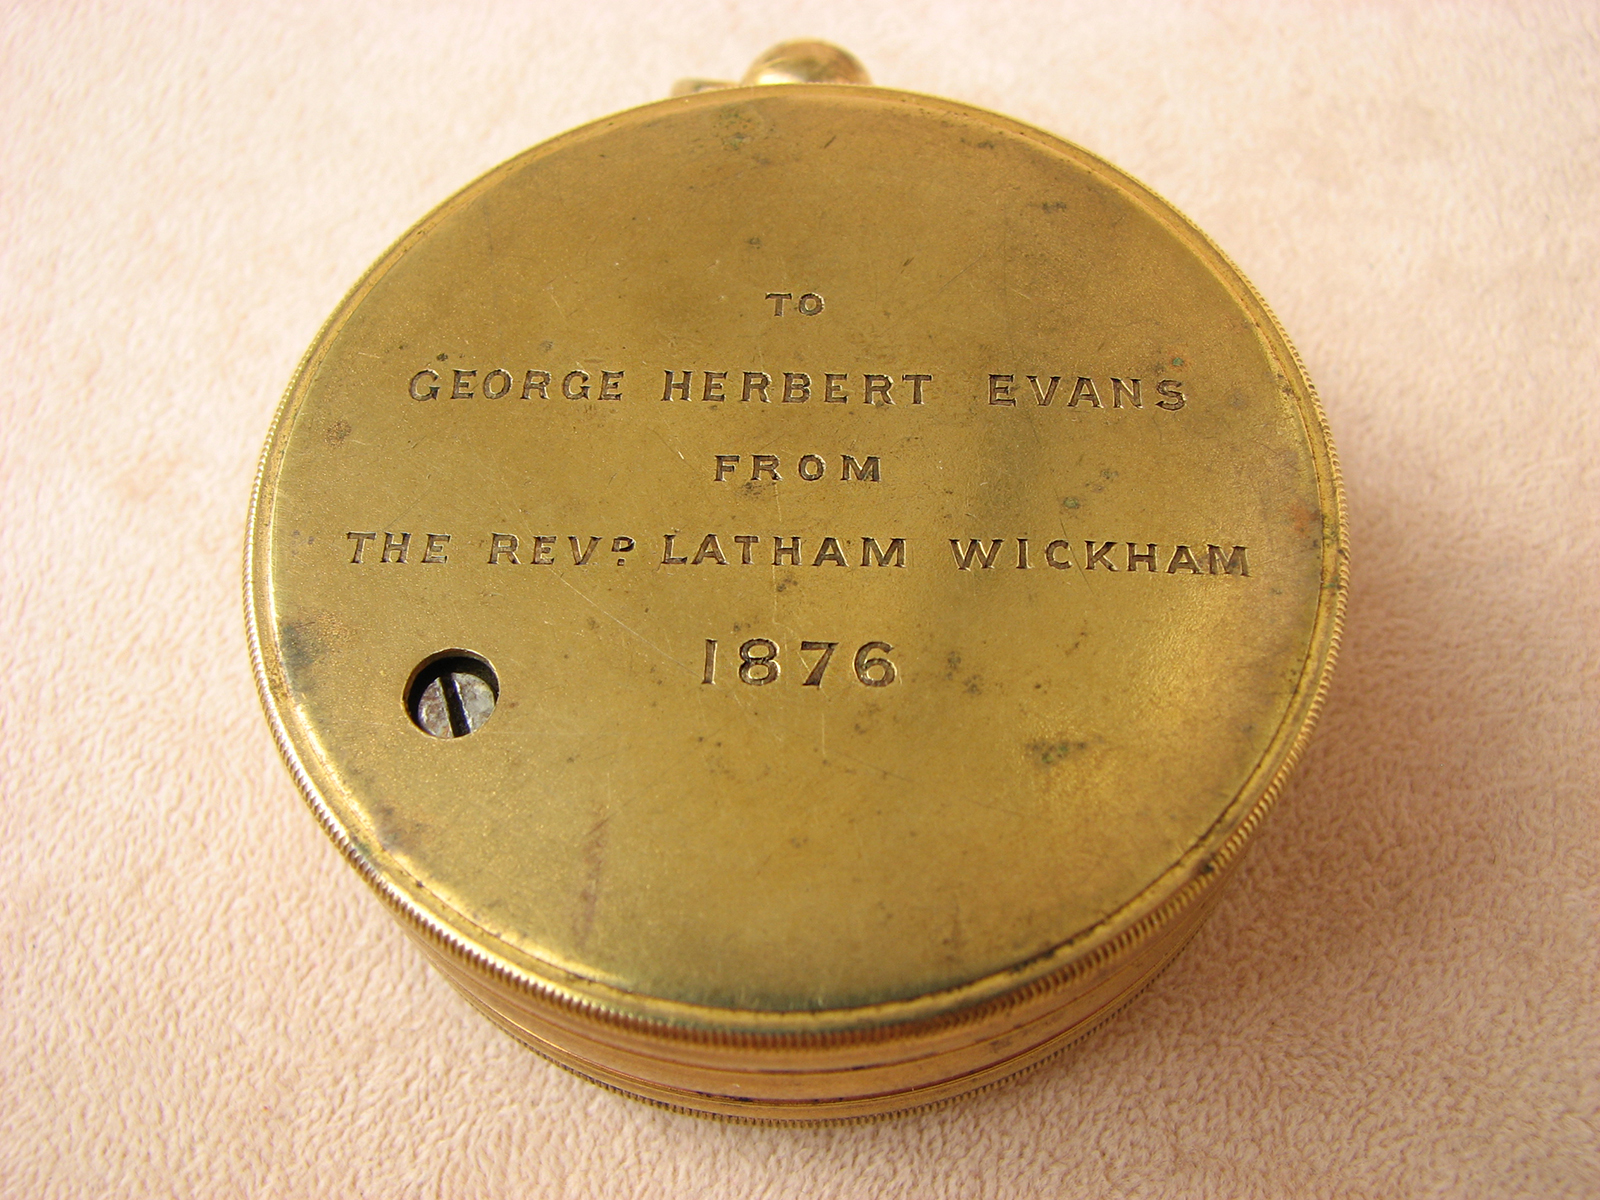 High altitude pocket barometer and altimeter with 1876 inscription